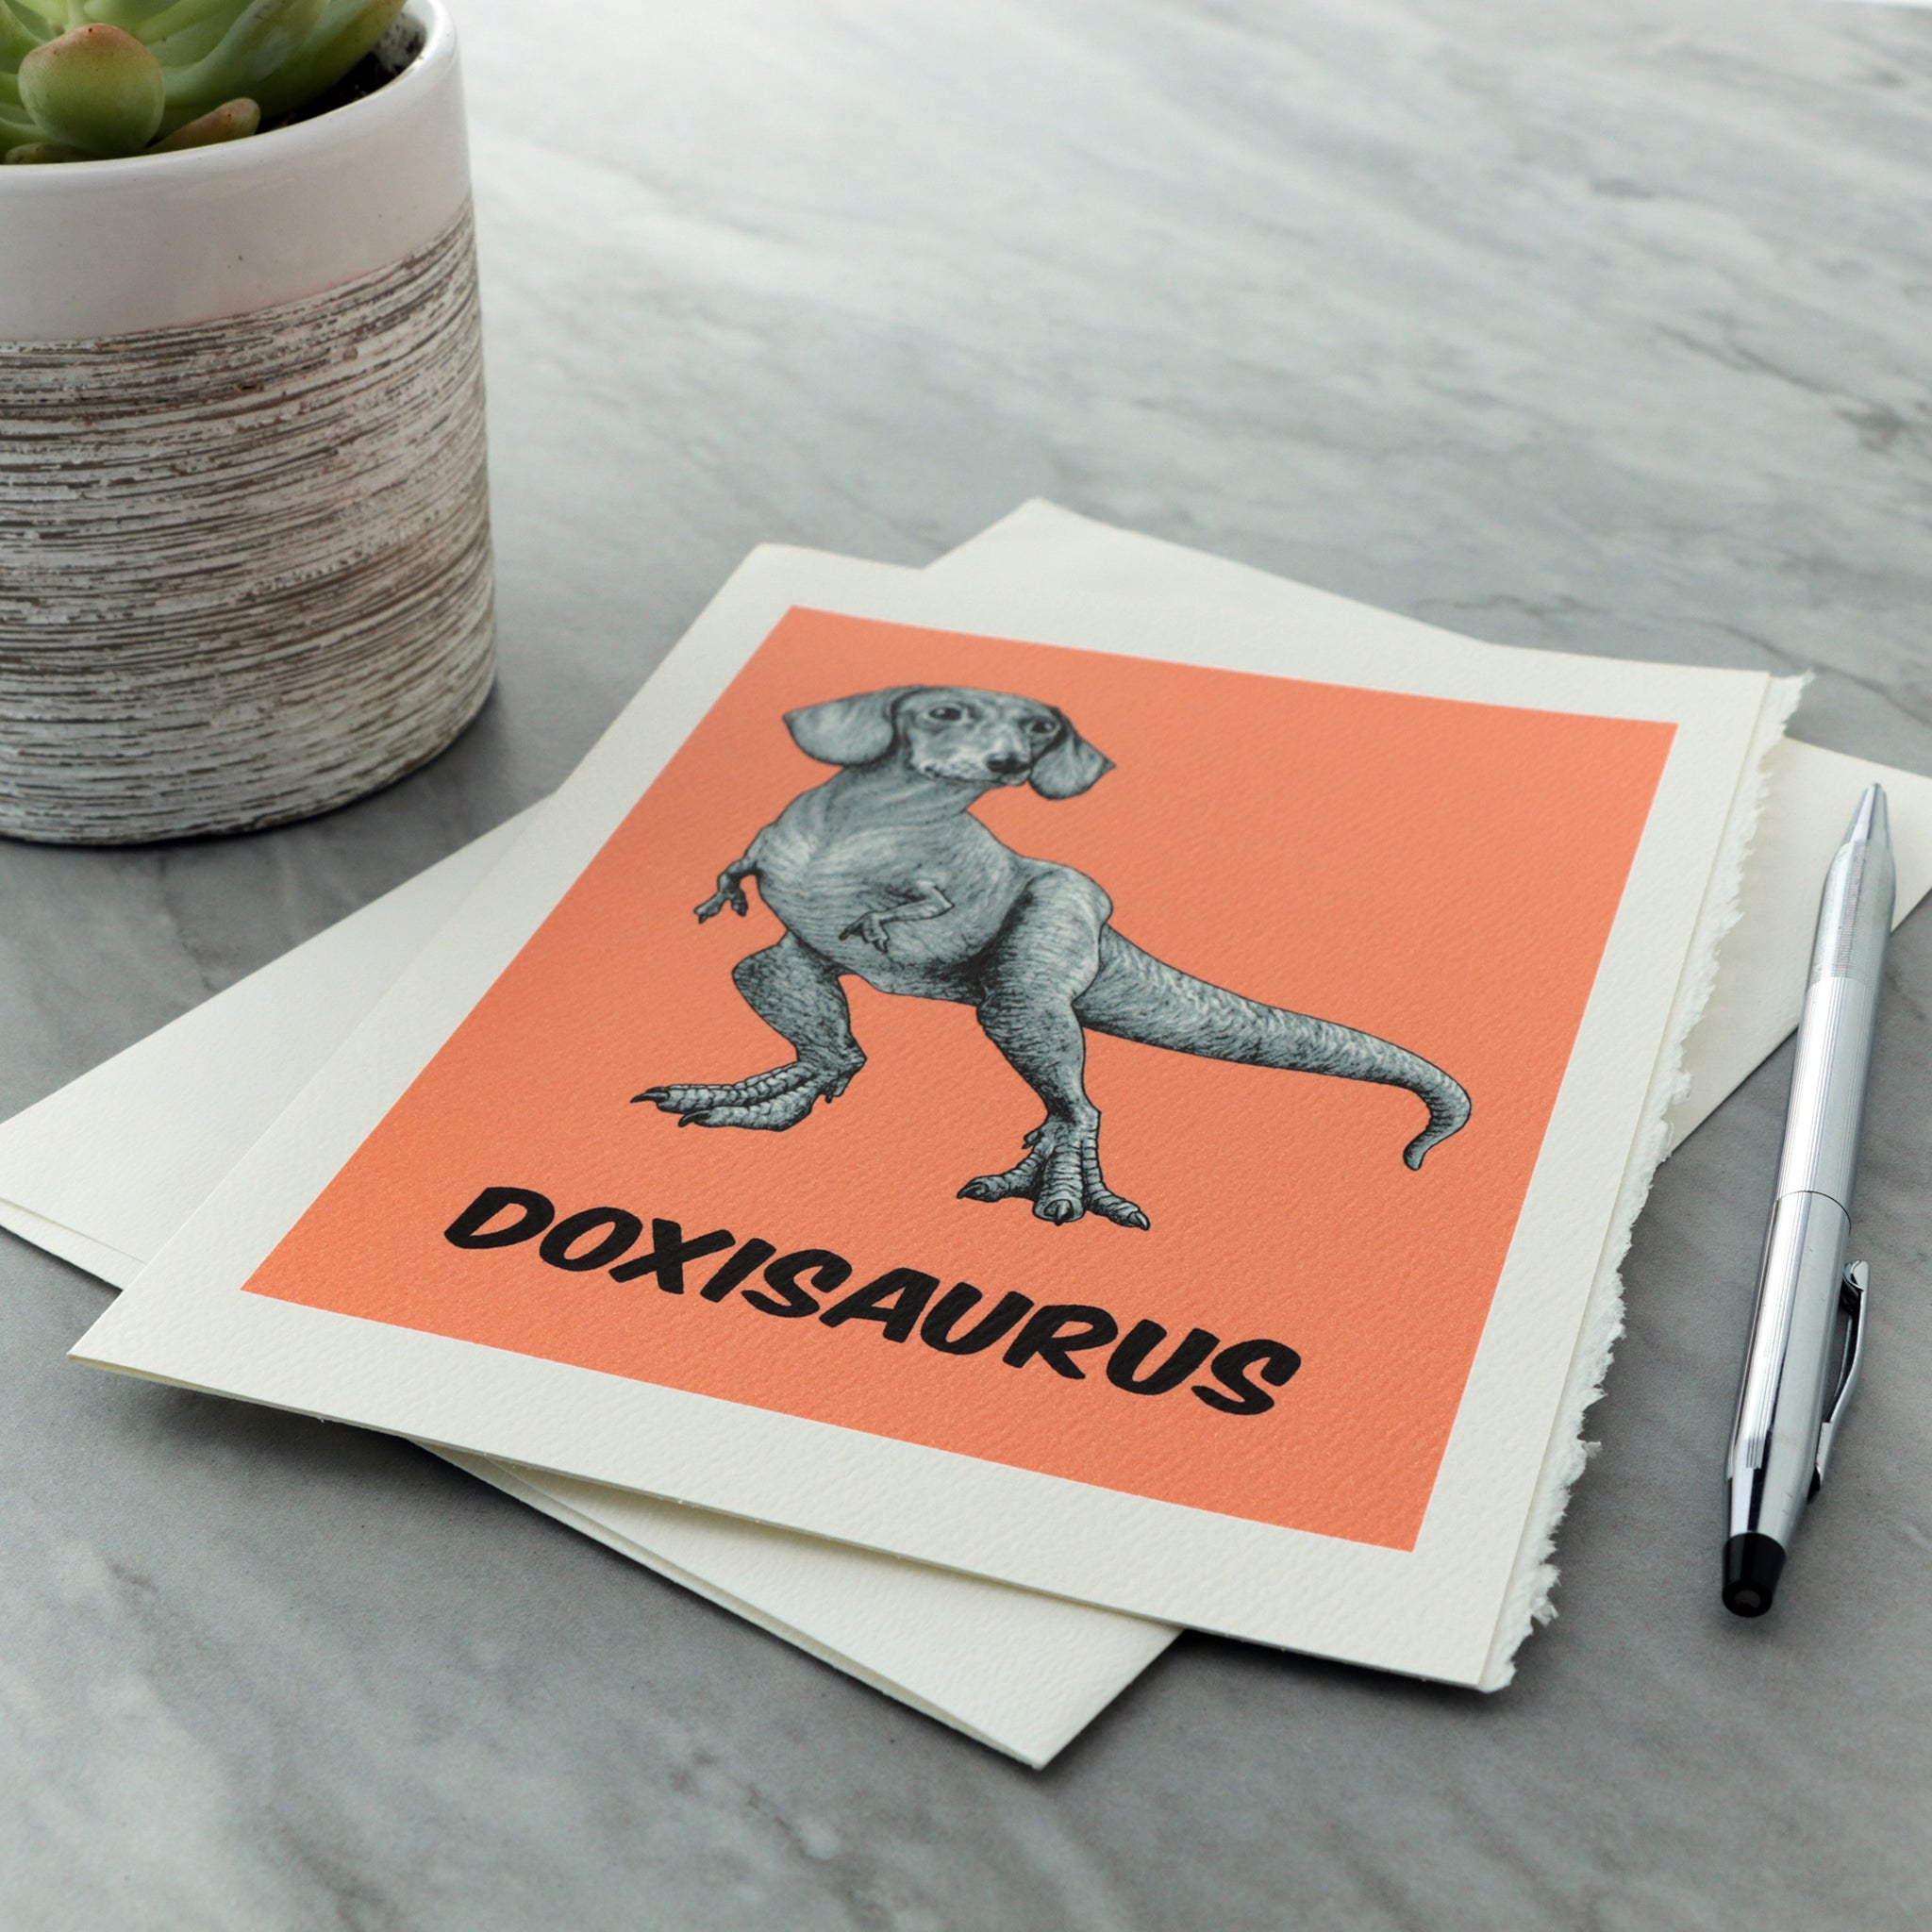 Doxisaurus 5x7" Greeting Card